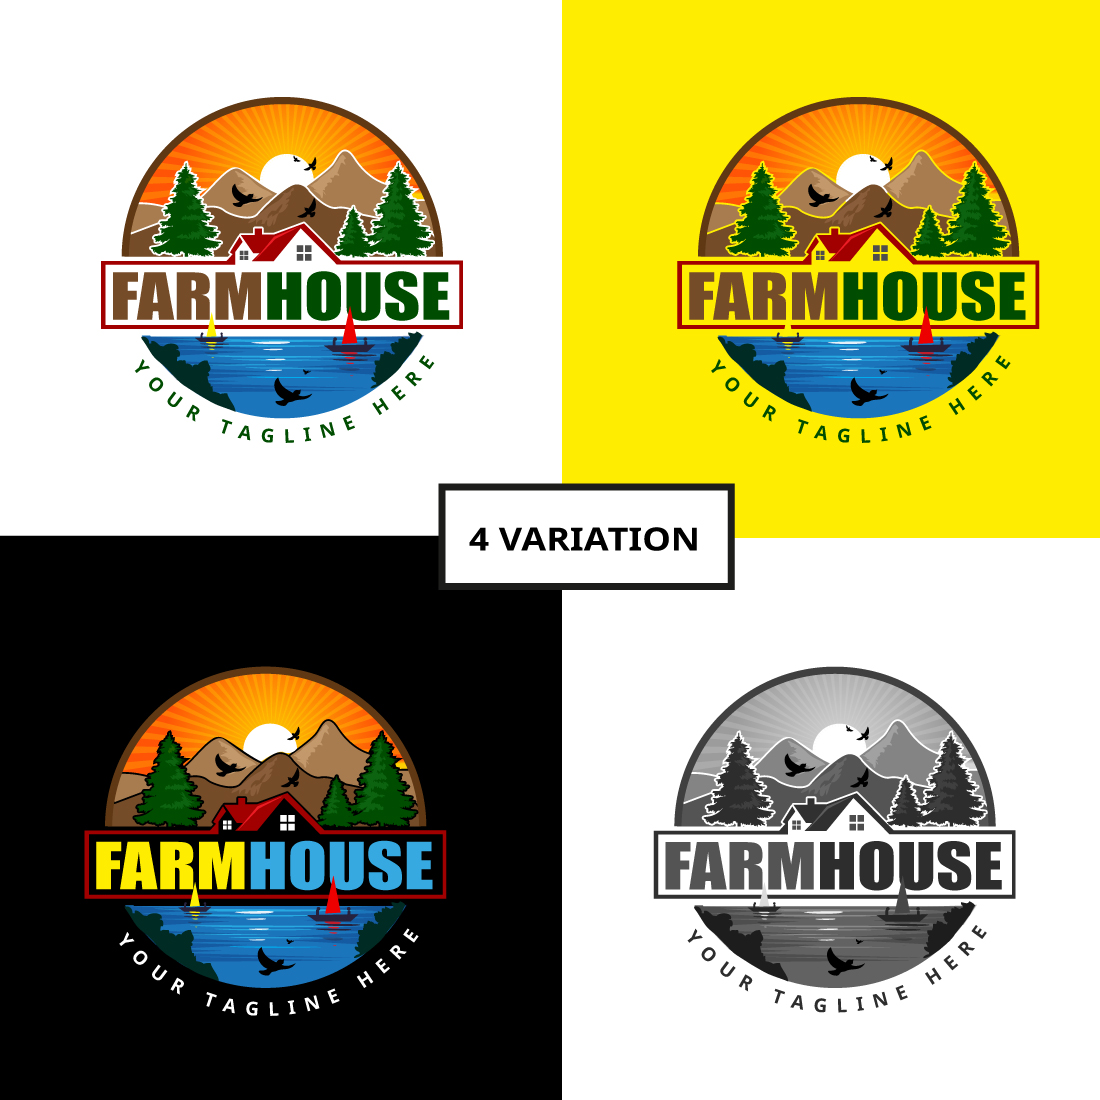 Adventure Farmhouse Logo Design cover image.